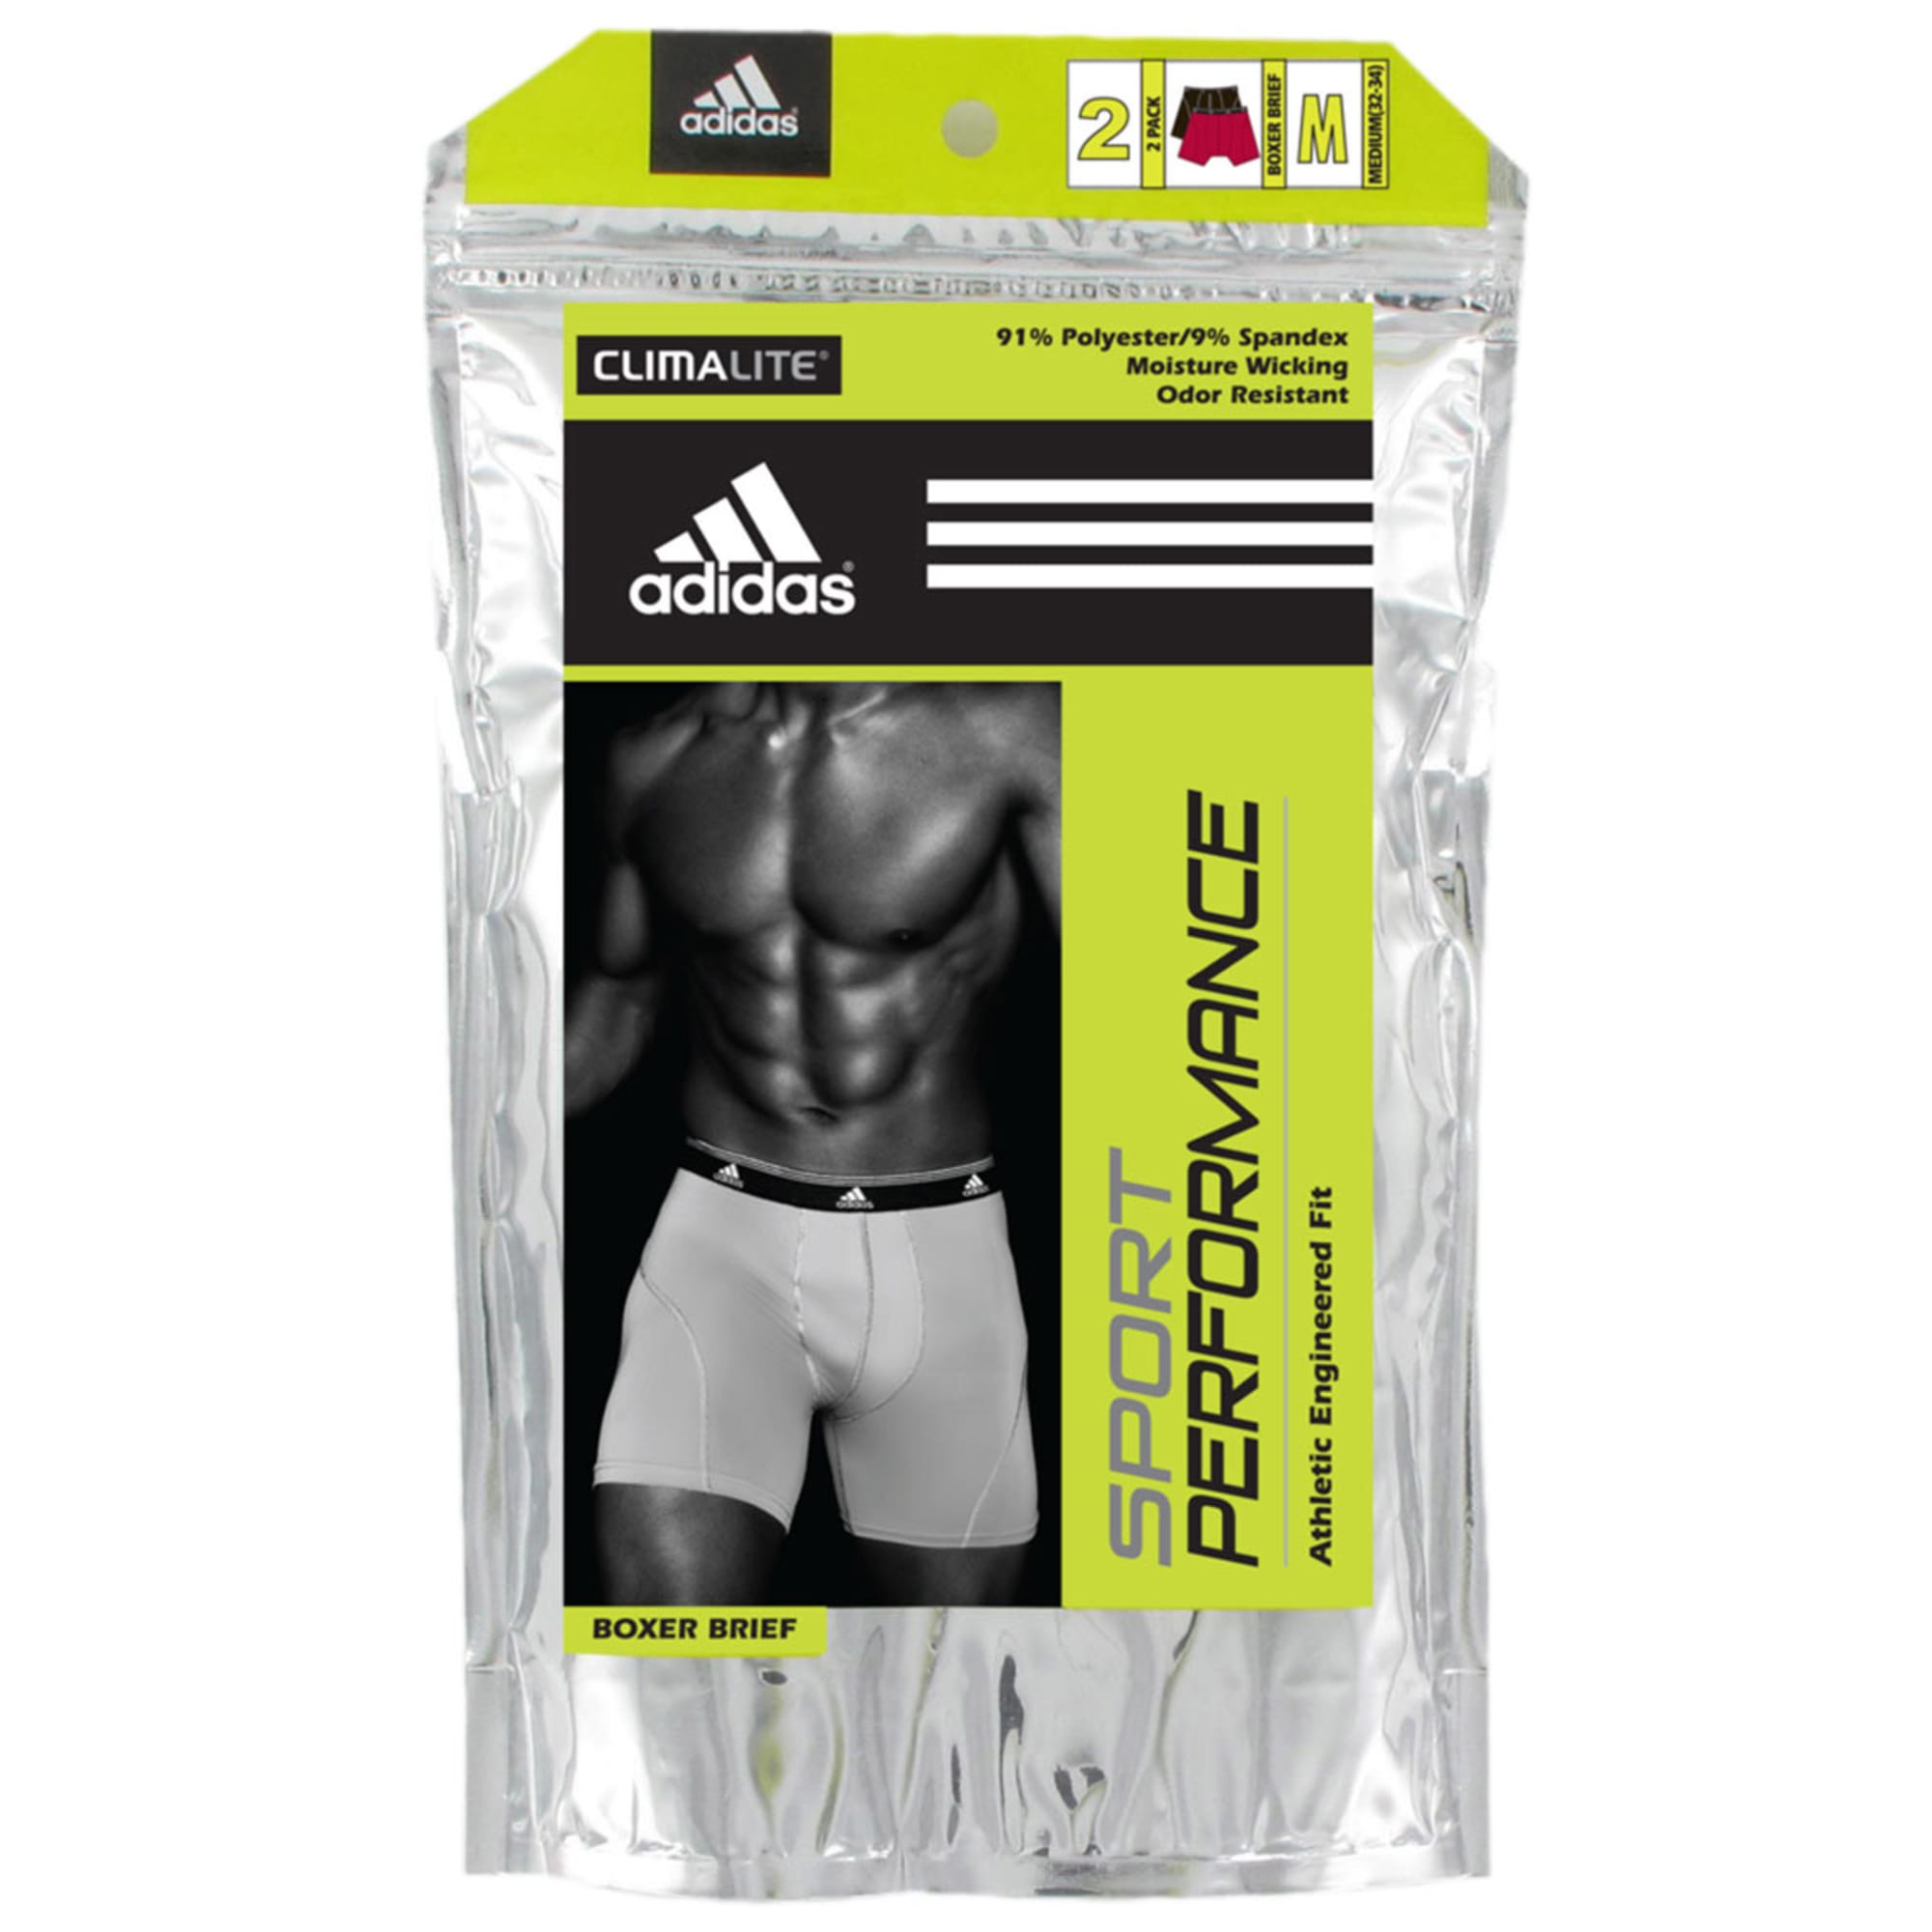 ADIDAS Men's Sport Performance Climalite Boxer Briefs, 2-Pack - Bob's Stores